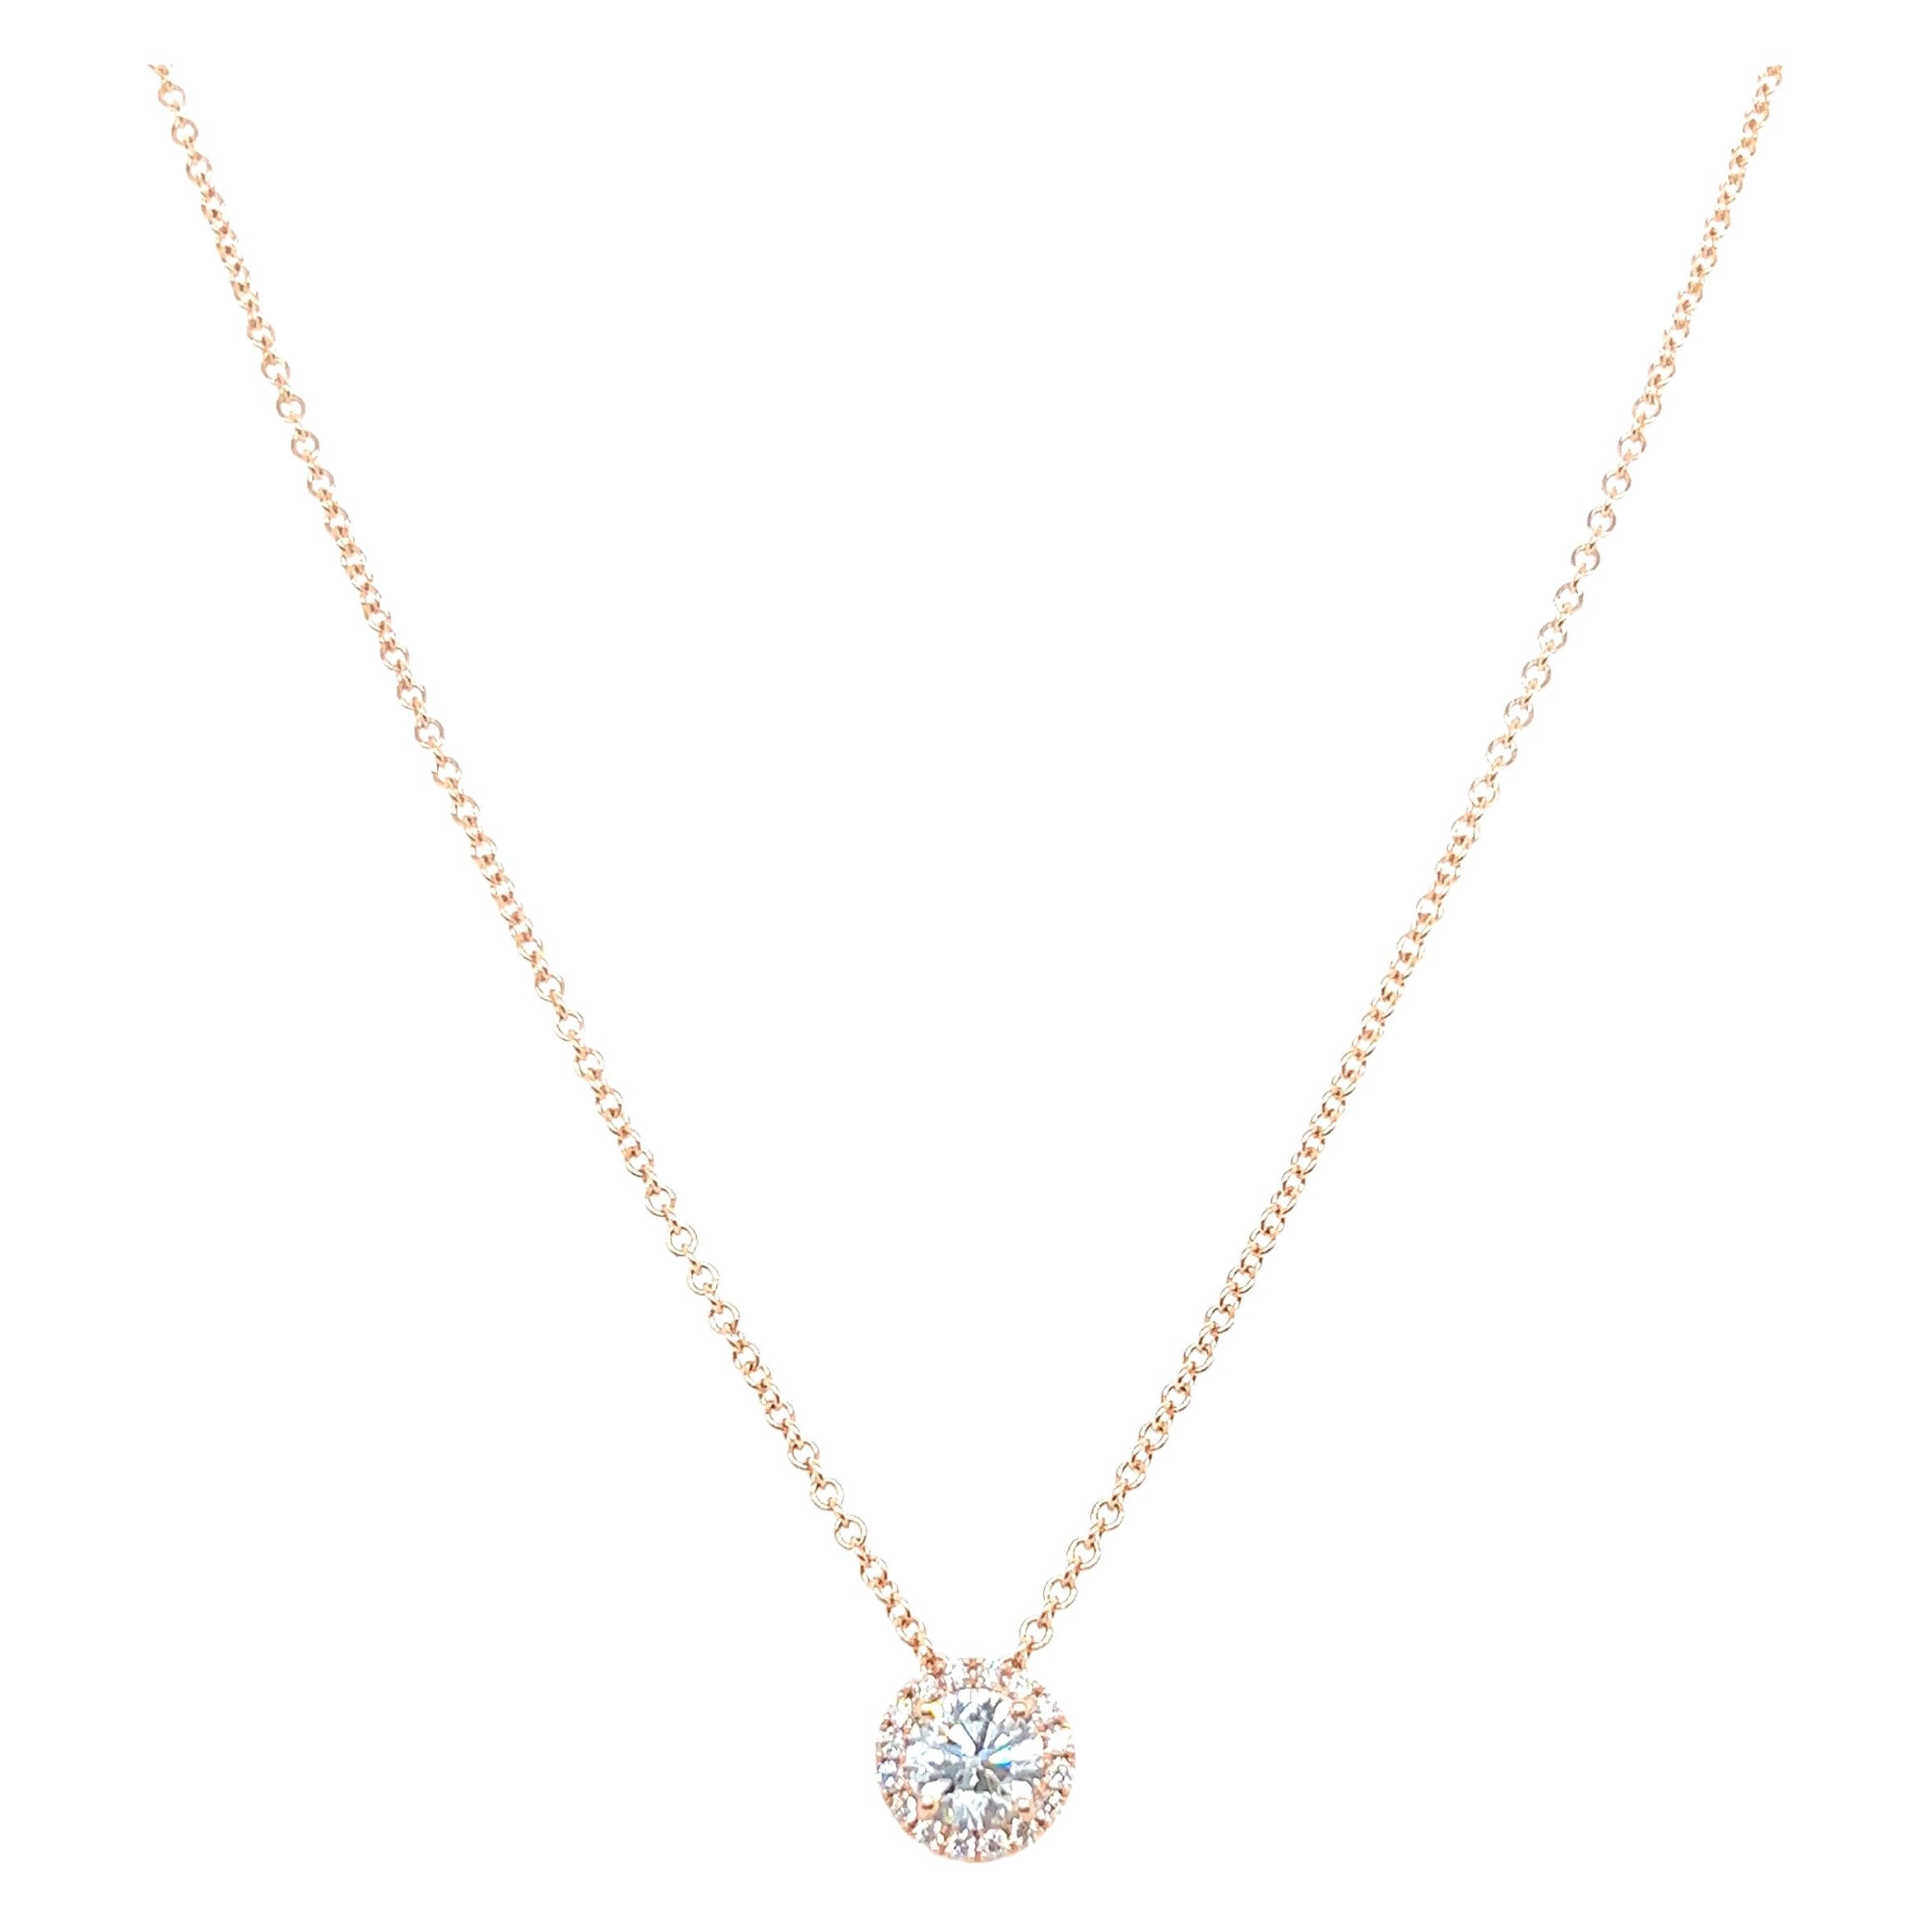 14k Rose Gold 0.90 Carat Round Cut Diamond Solitaire Pendant Necklace